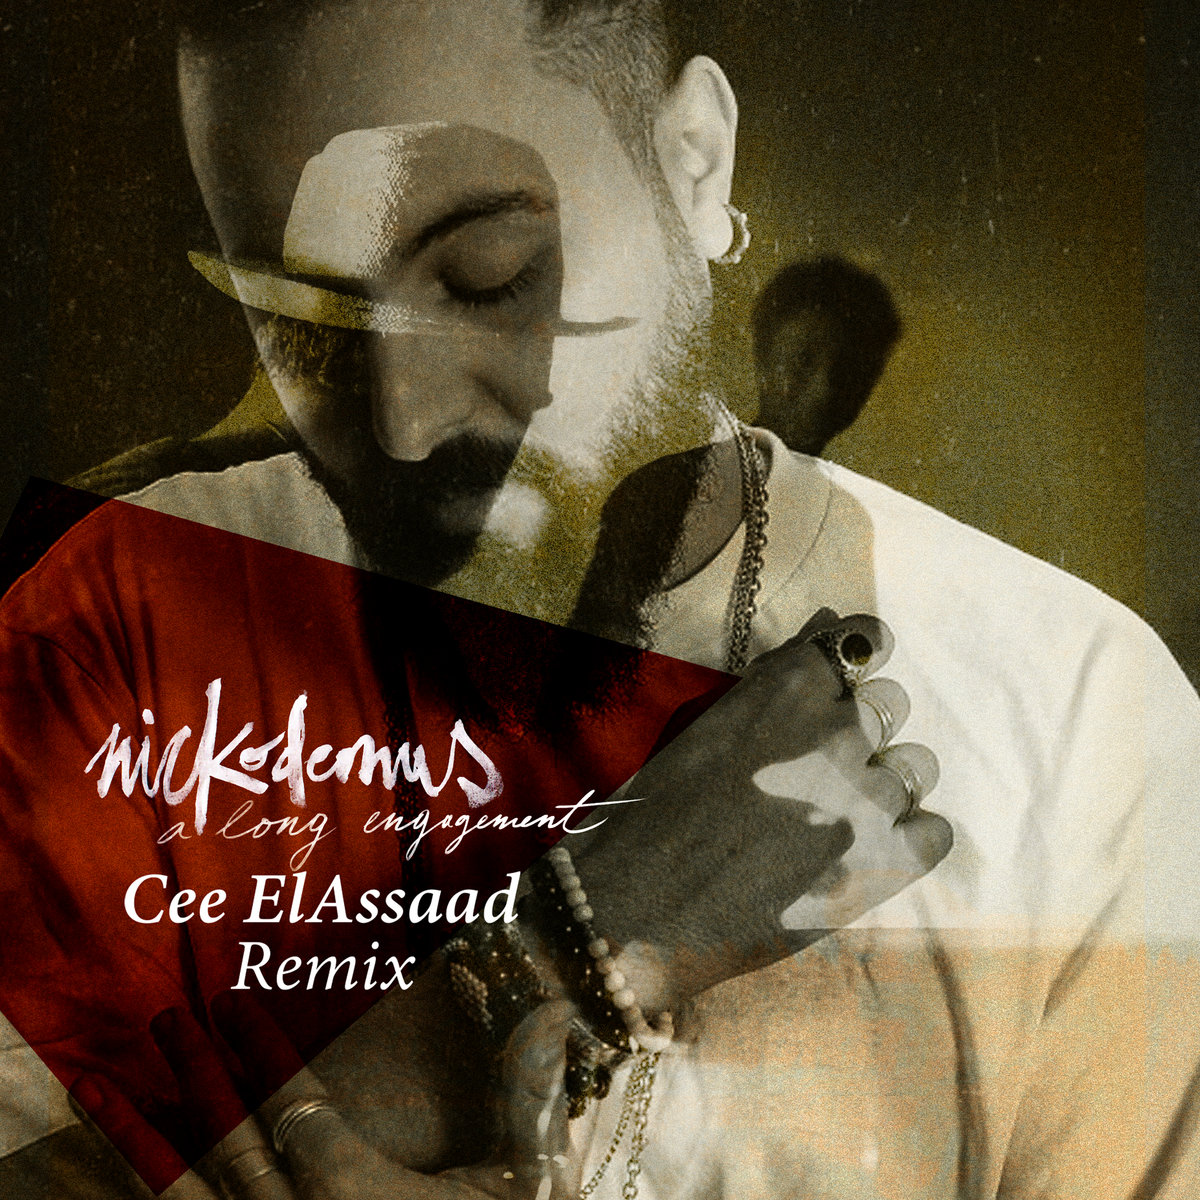 Nickodemus - A Long Engagement (Cee ElAssaad House Remix) [bandcamp]